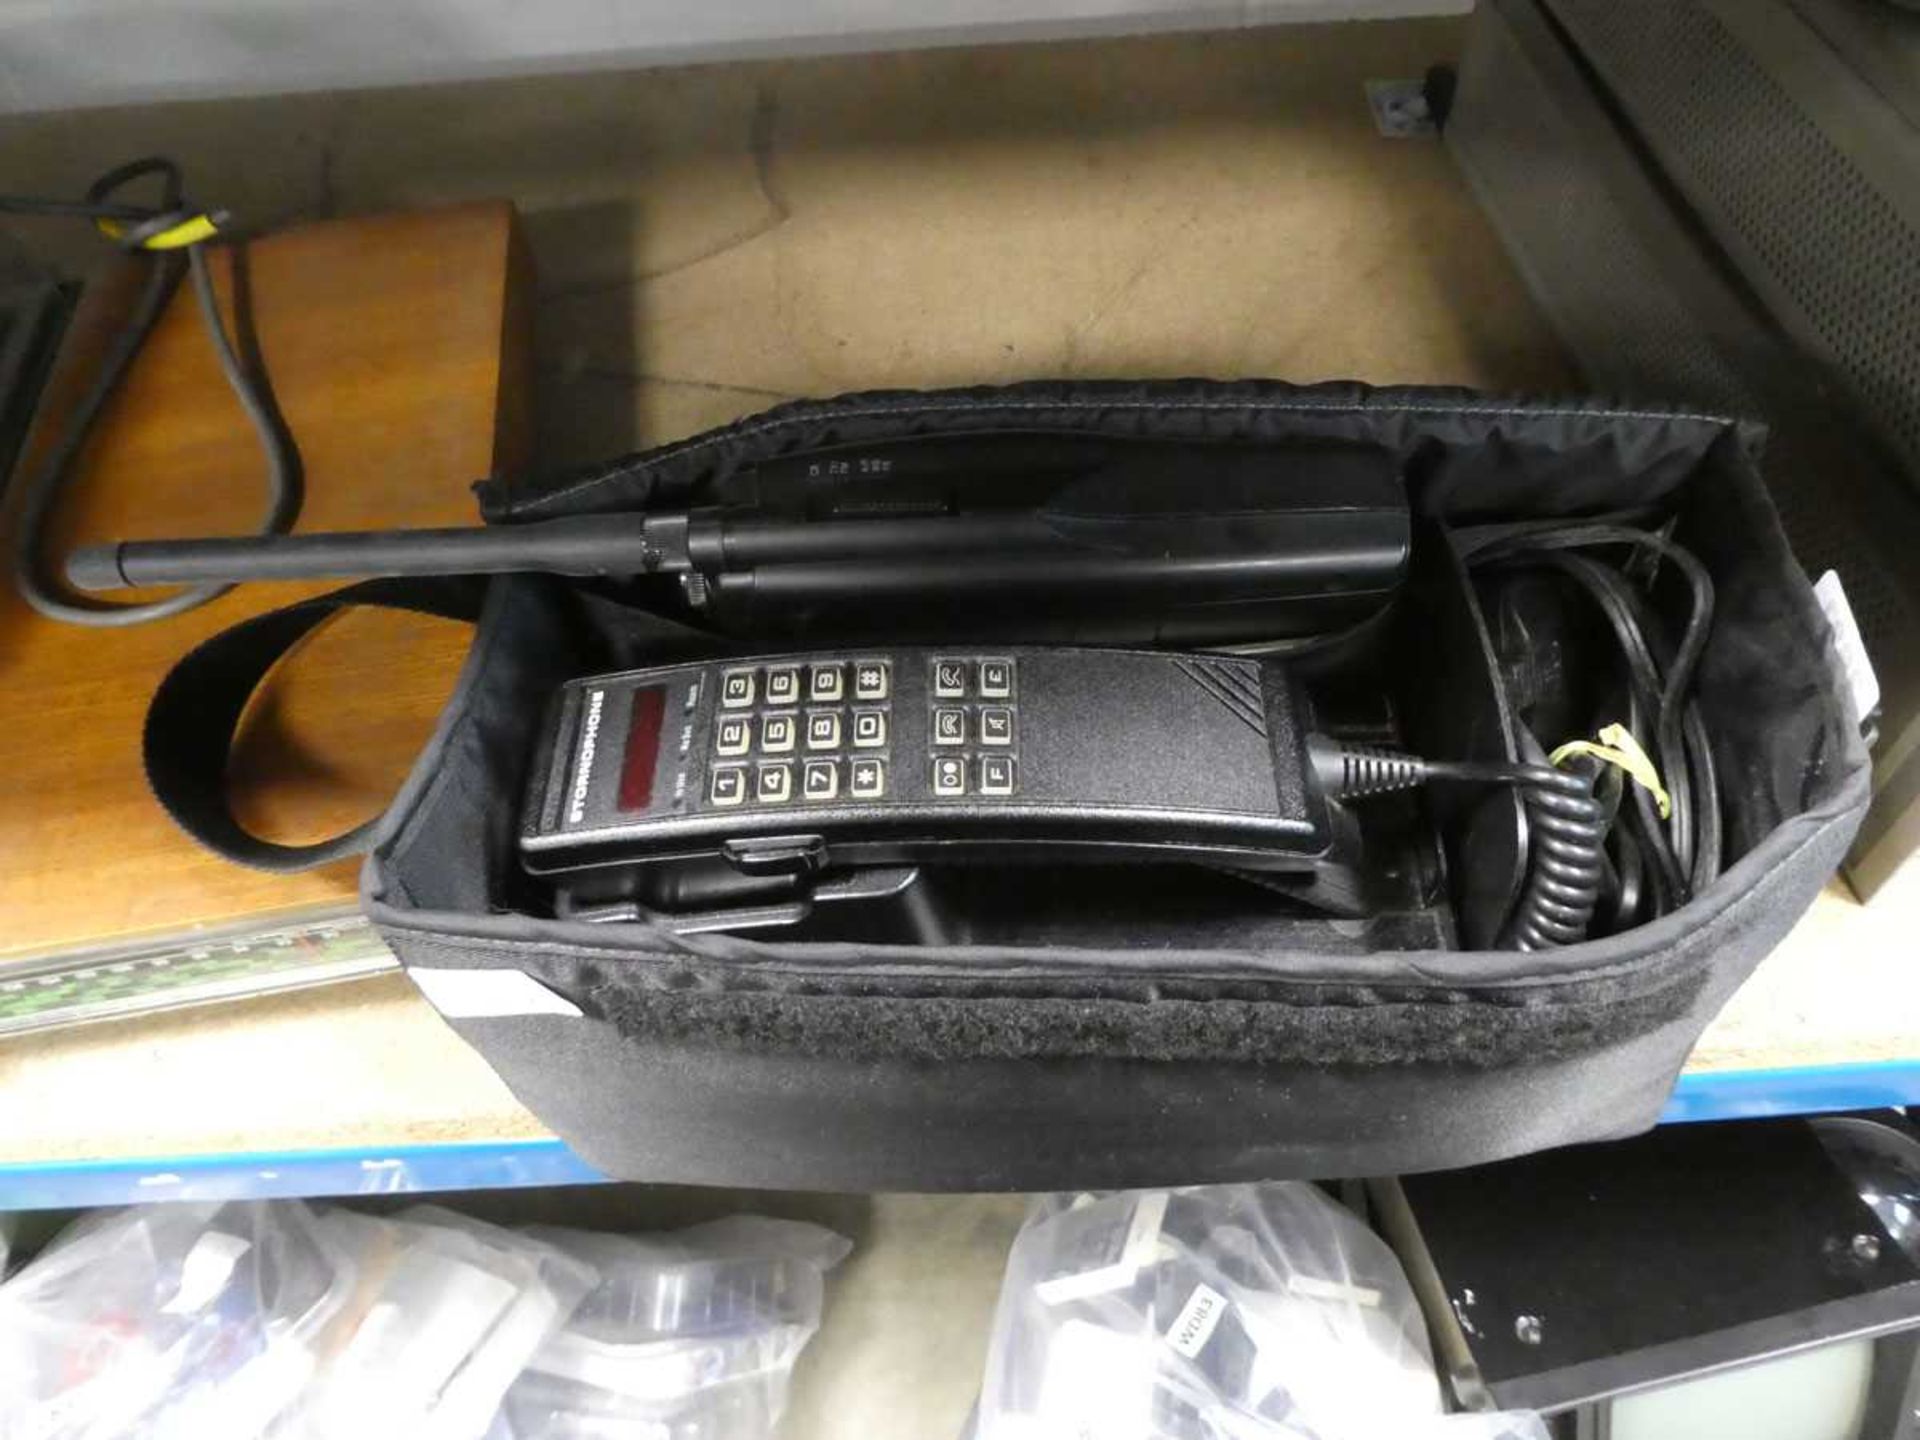 Motorola portable phone and radio set - Image 2 of 2